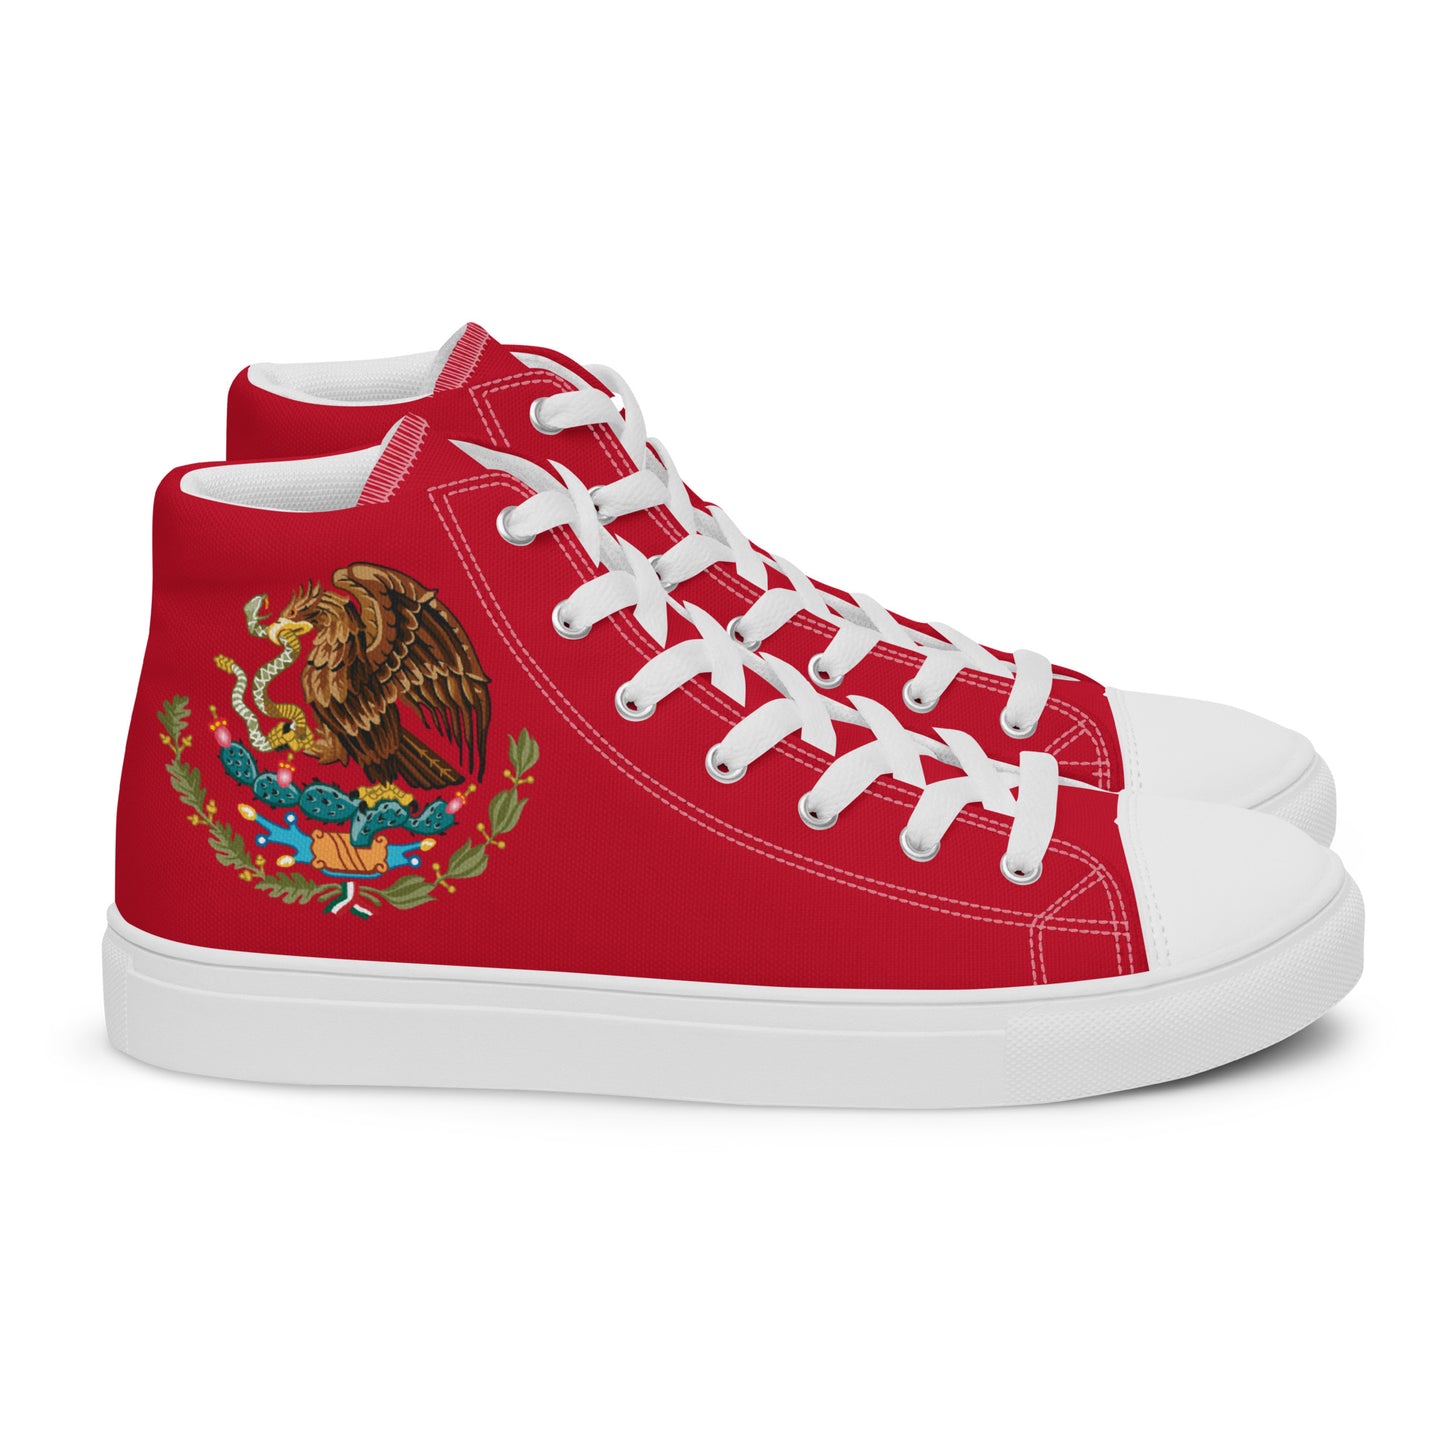 México - Women - Red - High top shoes